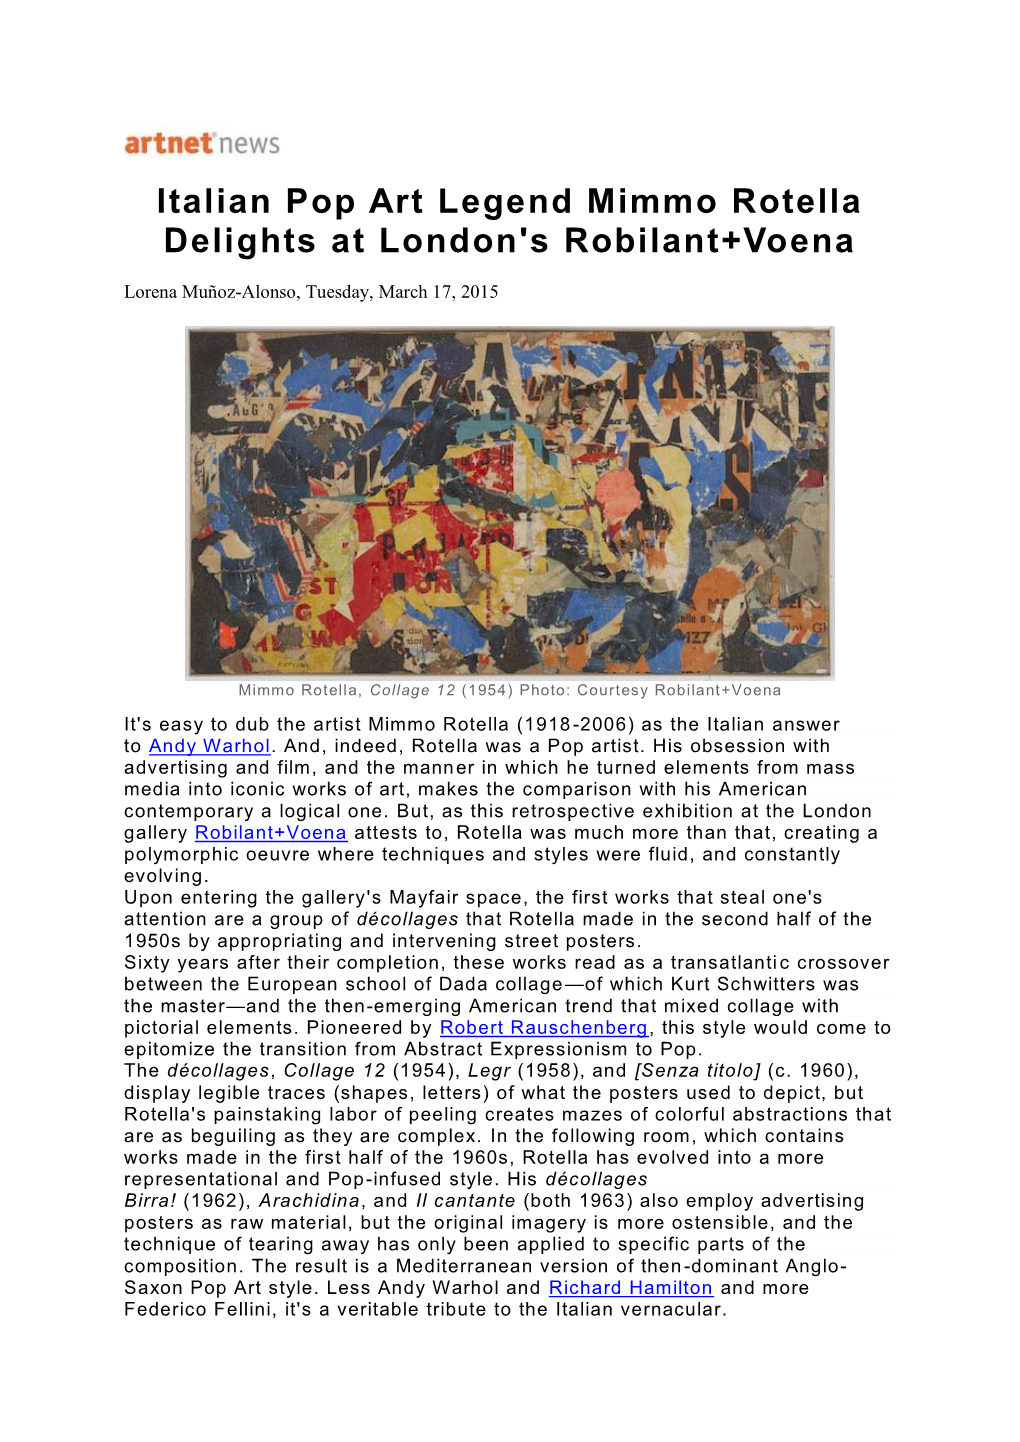 Italian Pop Art Legend Mimmo Rotella Delights at London's Robilant+Voena